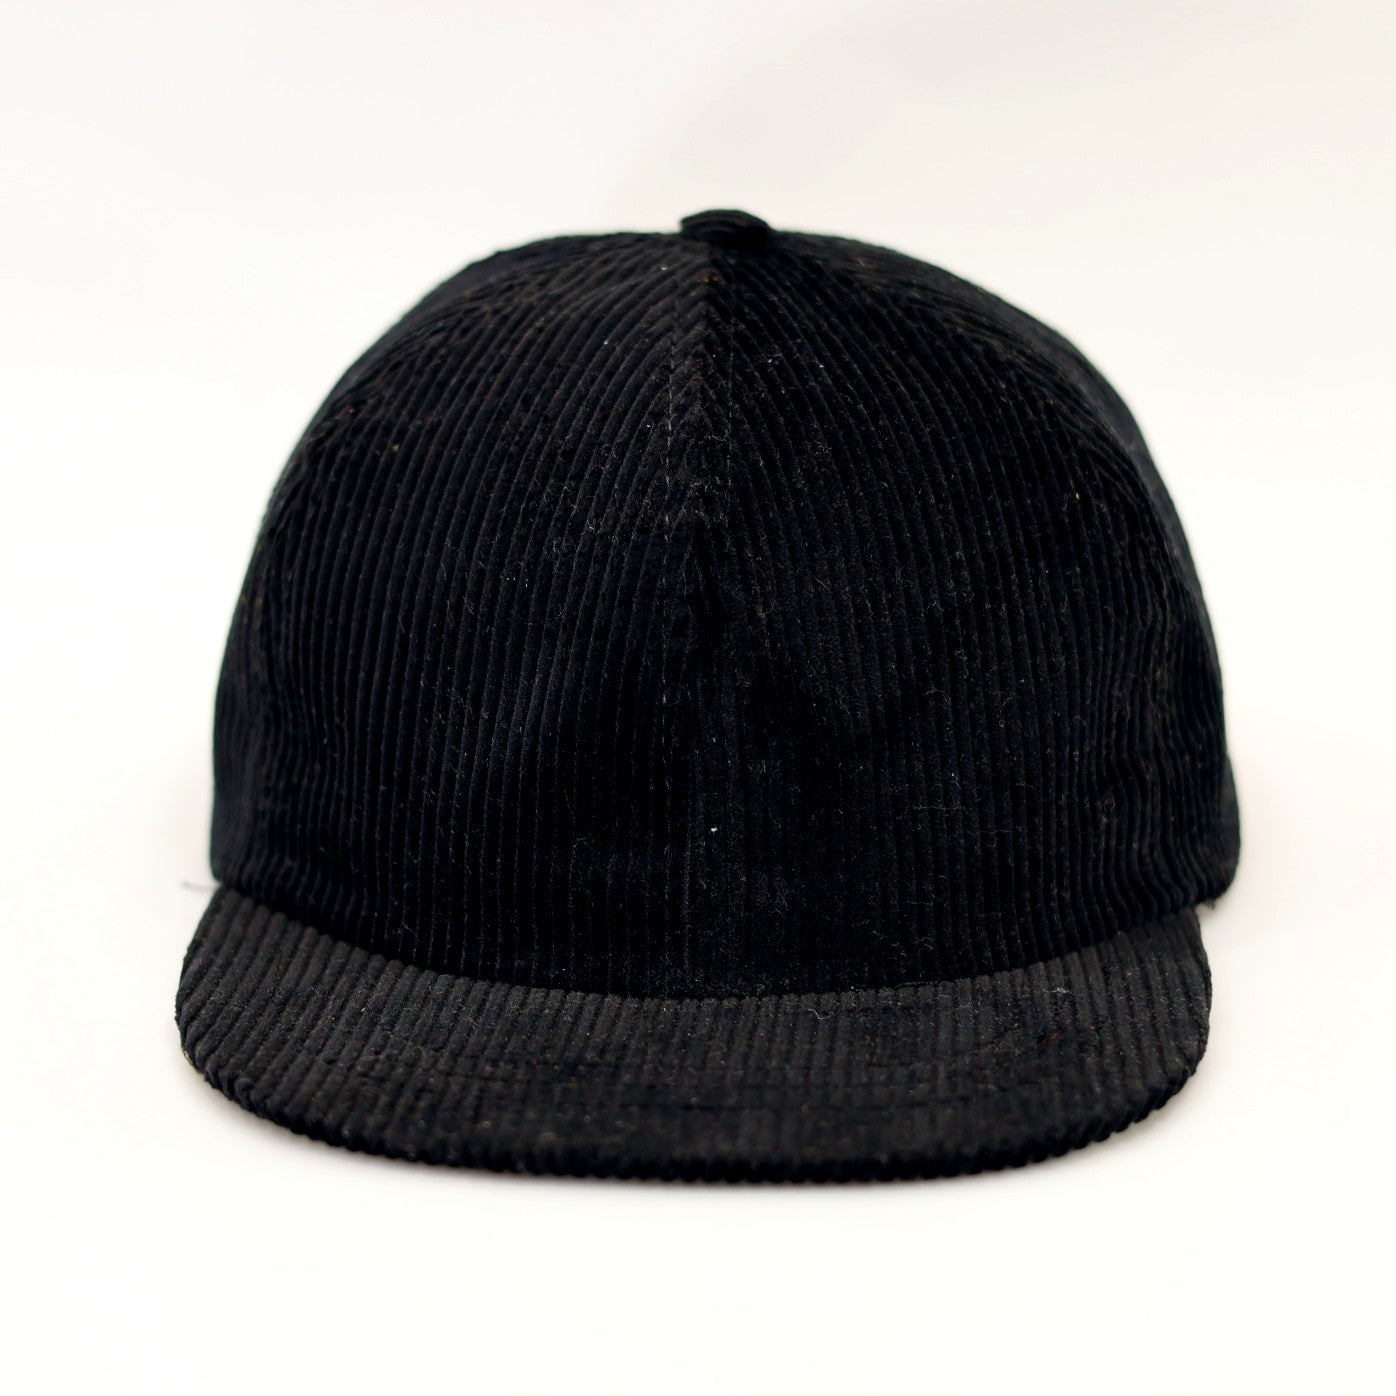 BALL CAP | BLACK BISON